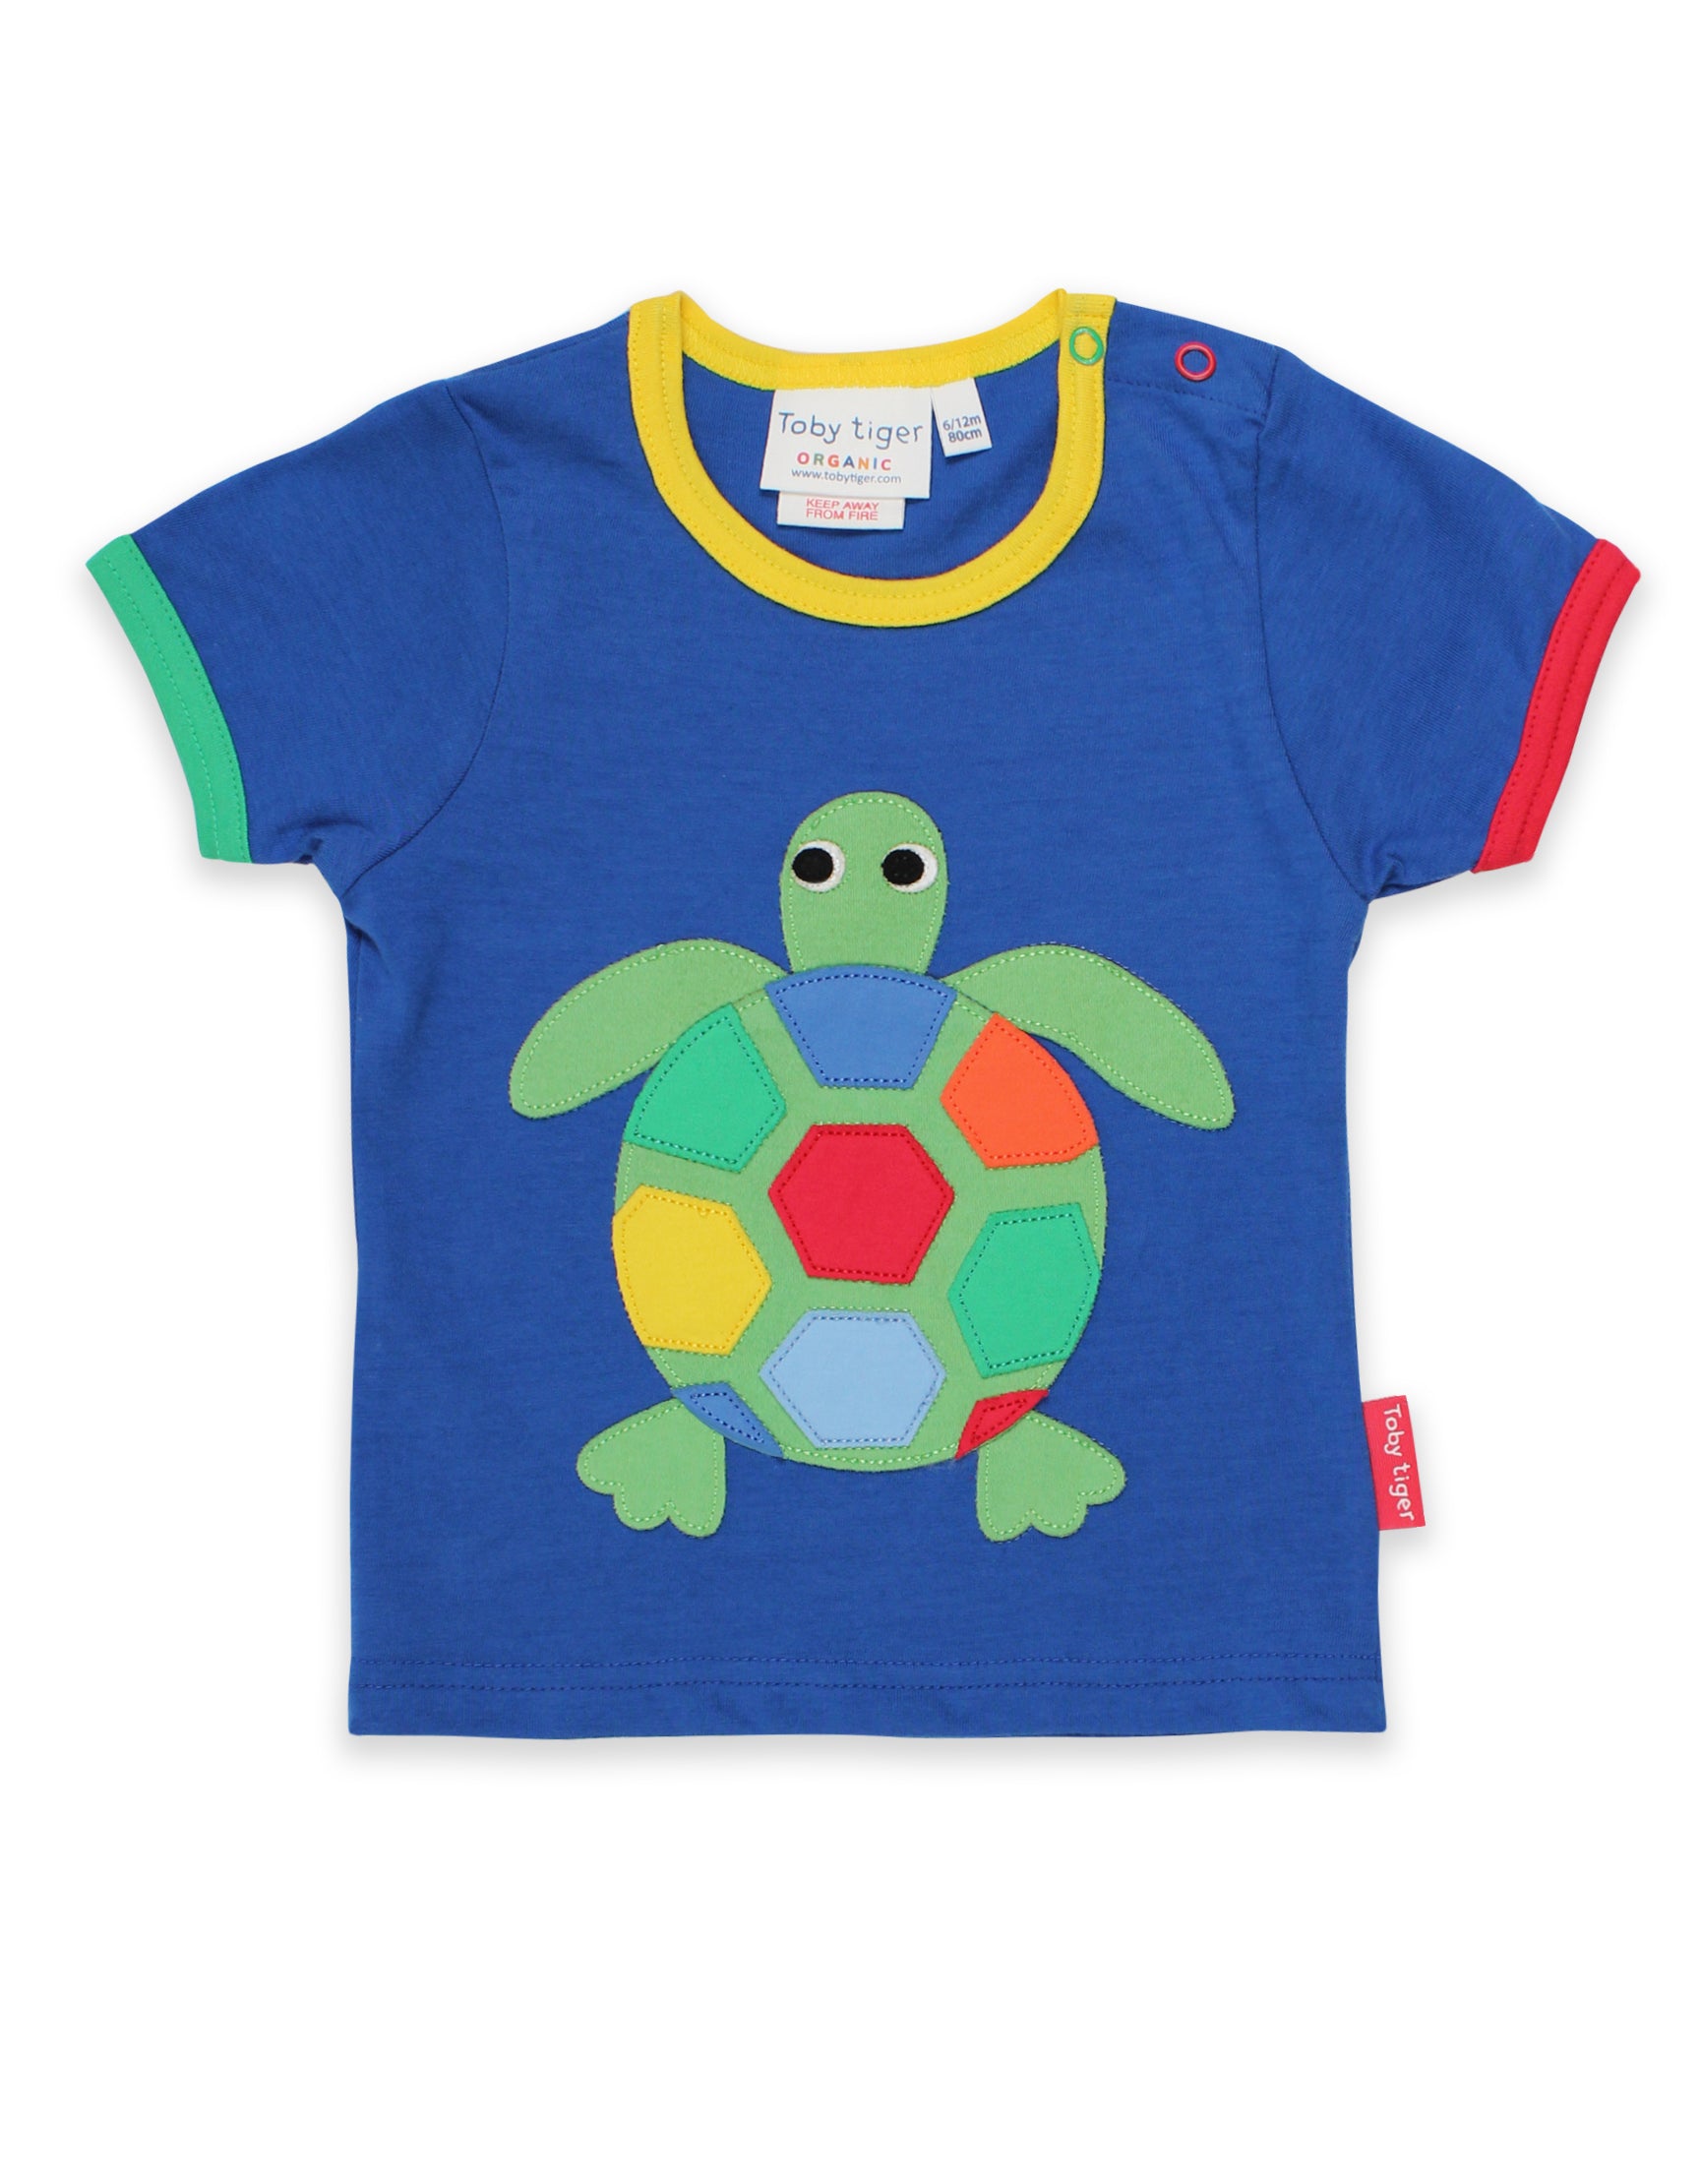 Toby Tiger Organic Turtle Applique T-Shirt